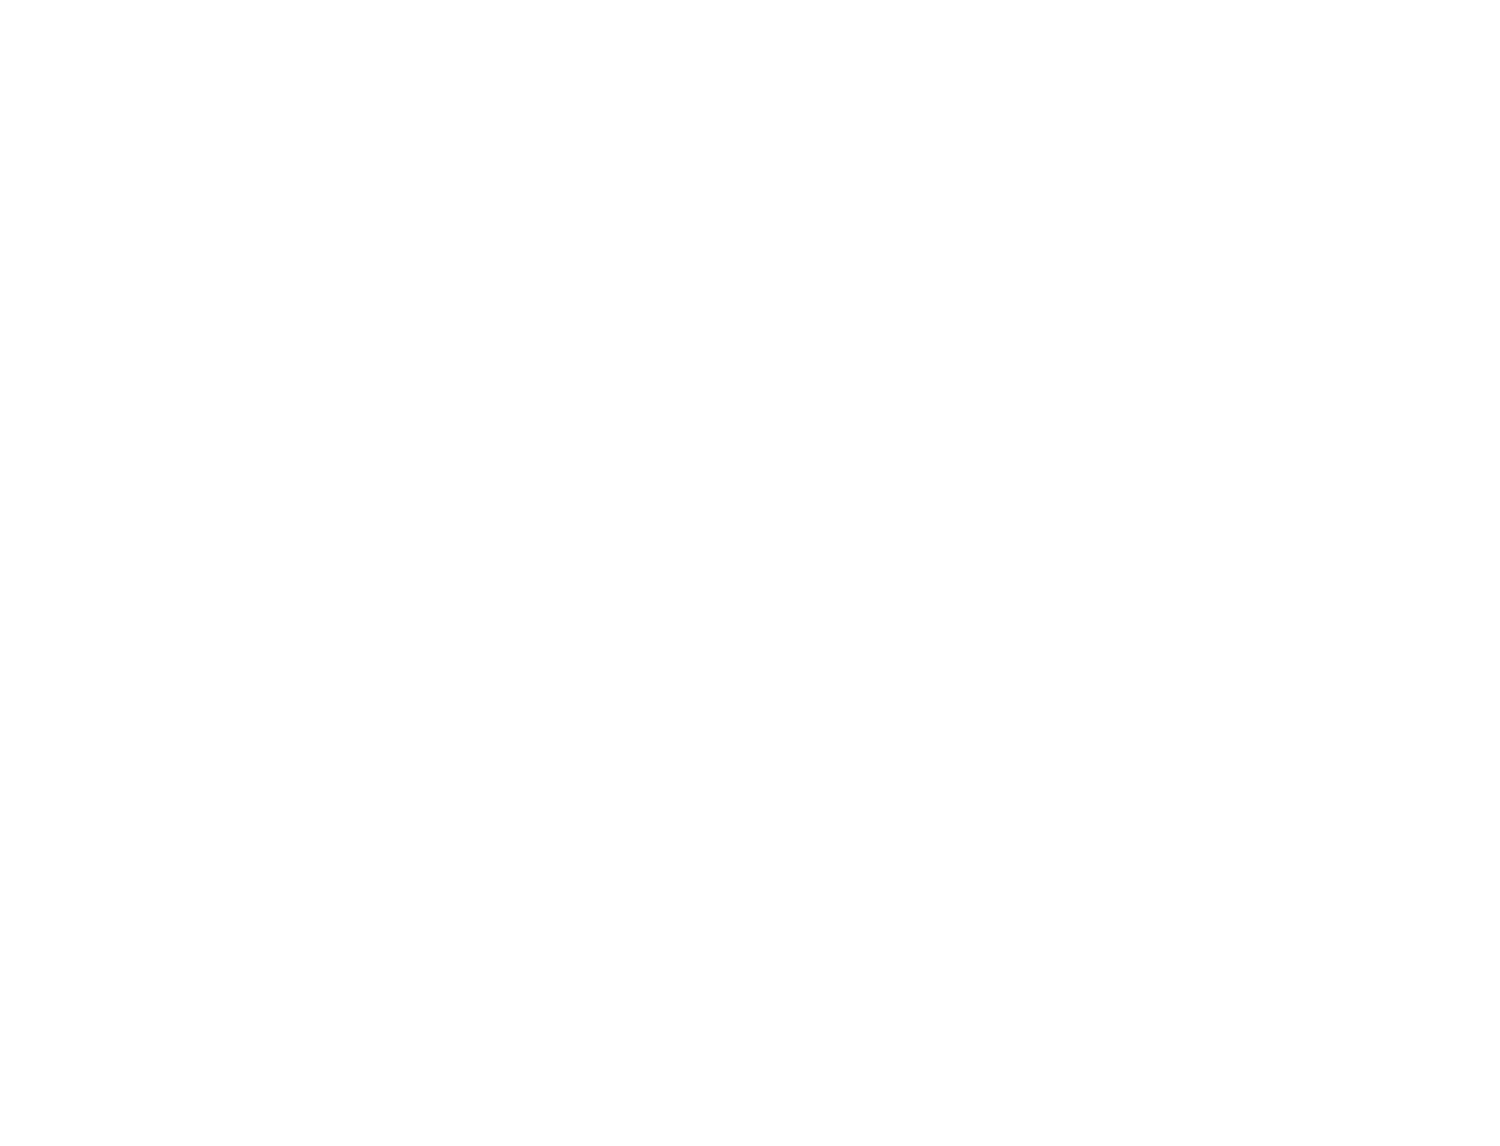 Catwood